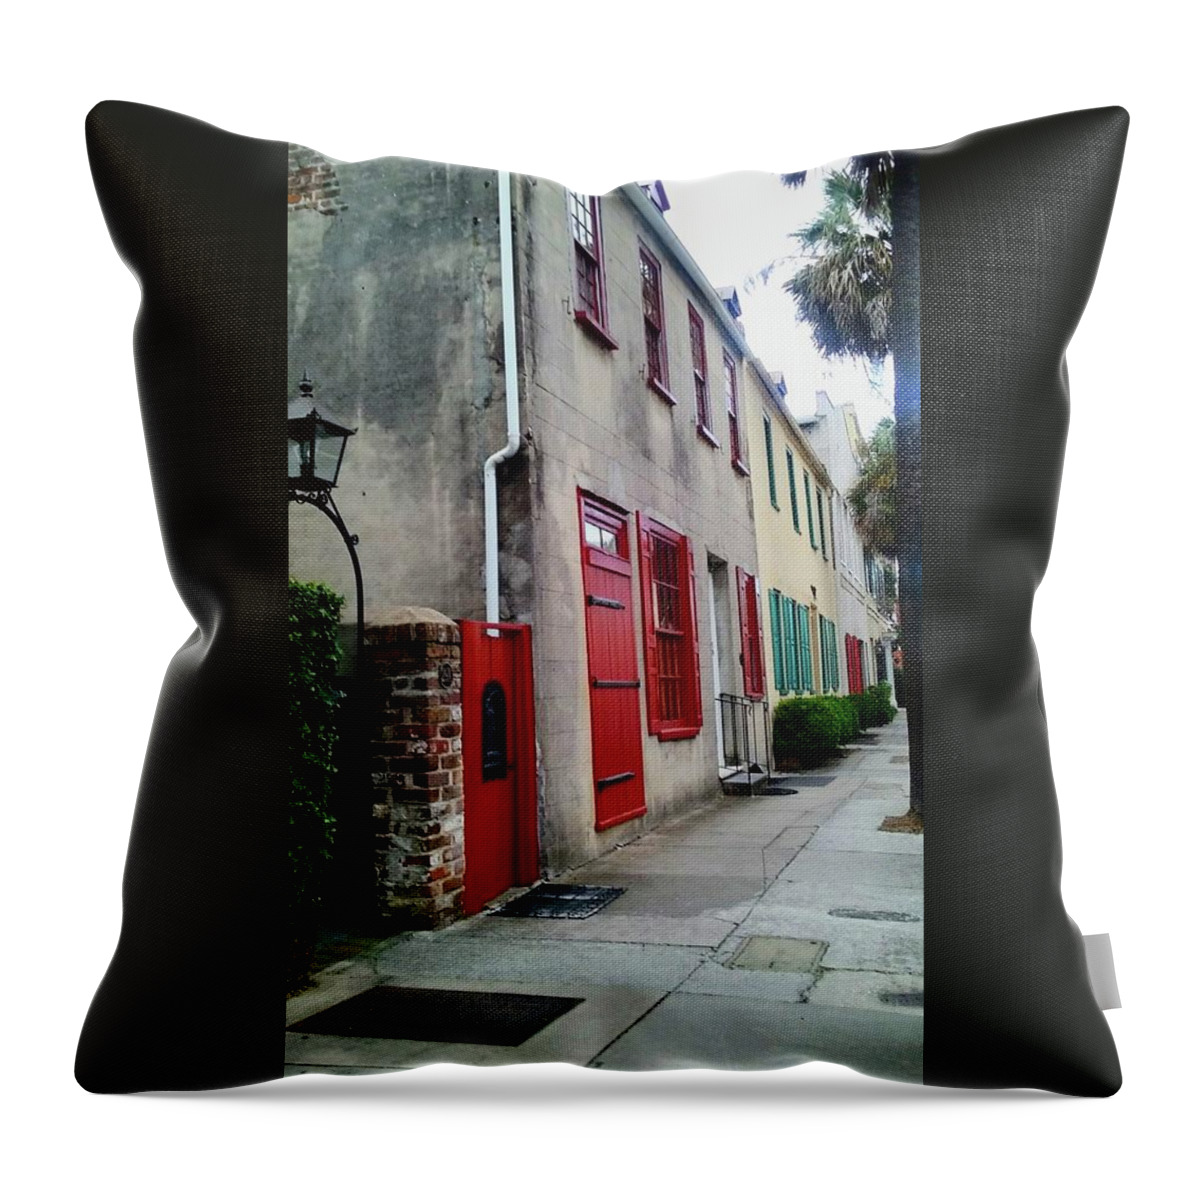 Charleston Rainbo Throw Pillow featuring the photograph Rainbow Row by Victor Thomason